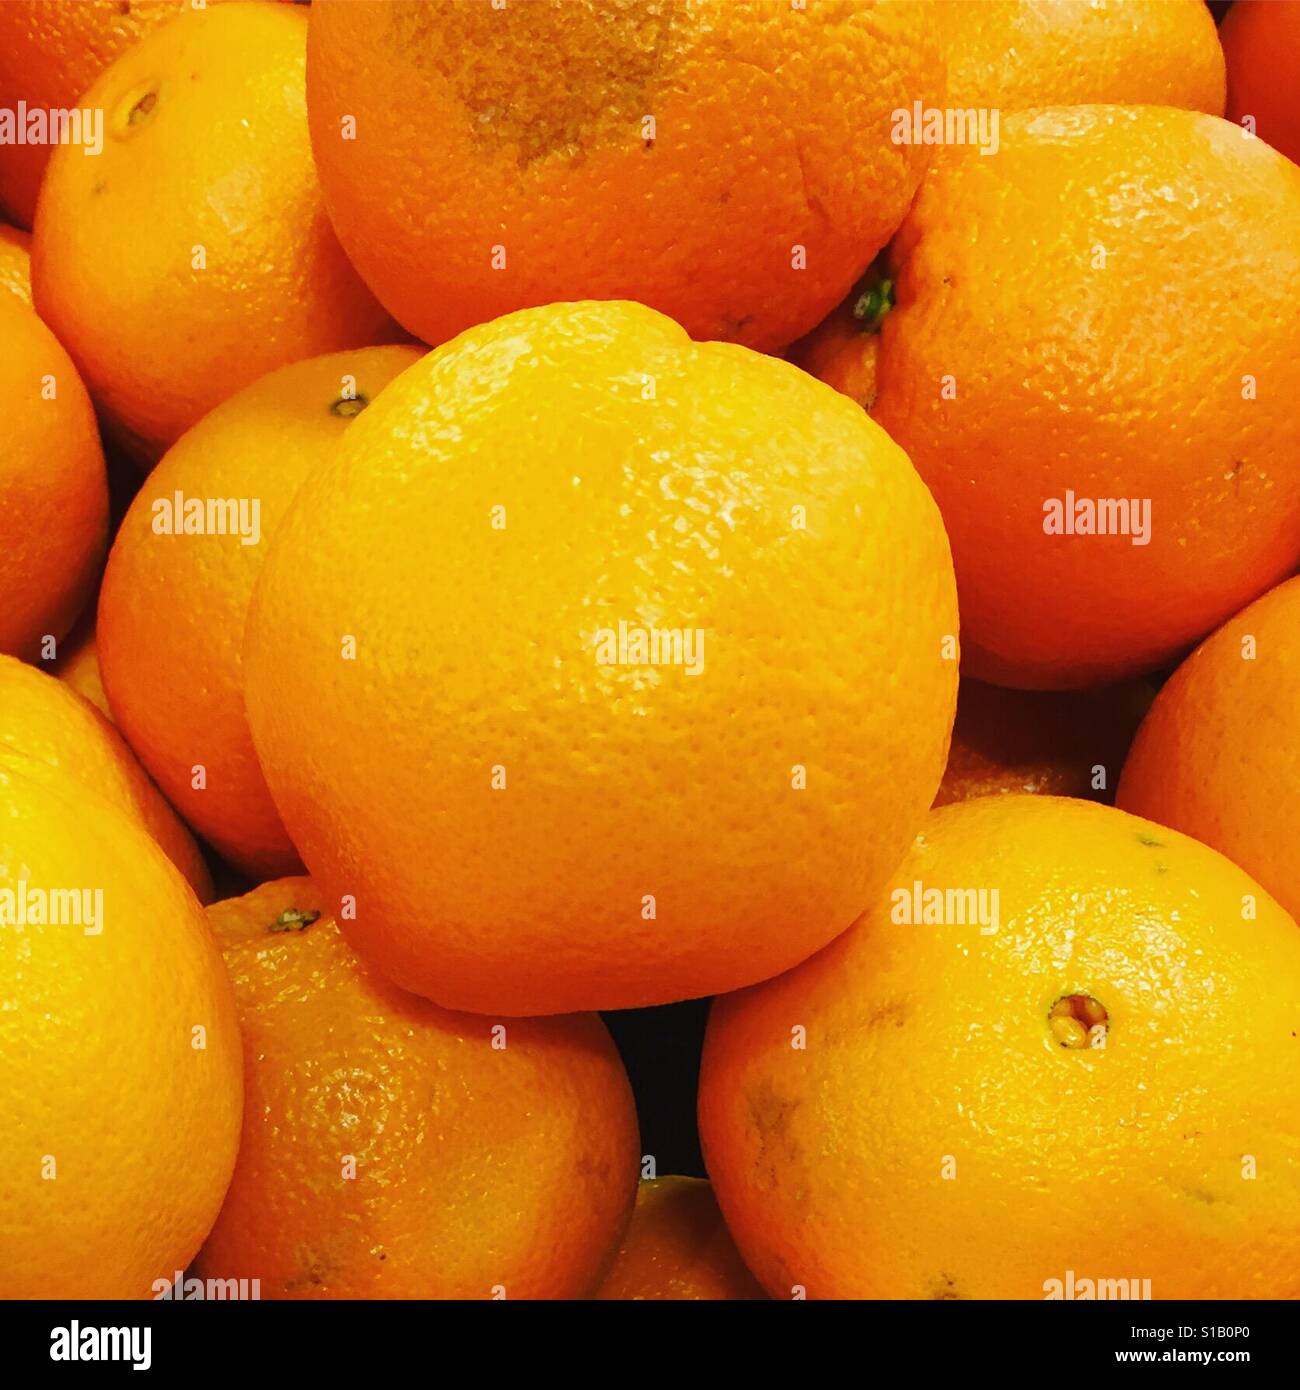 Fresh juicy oranges by K.R. Stock Photo